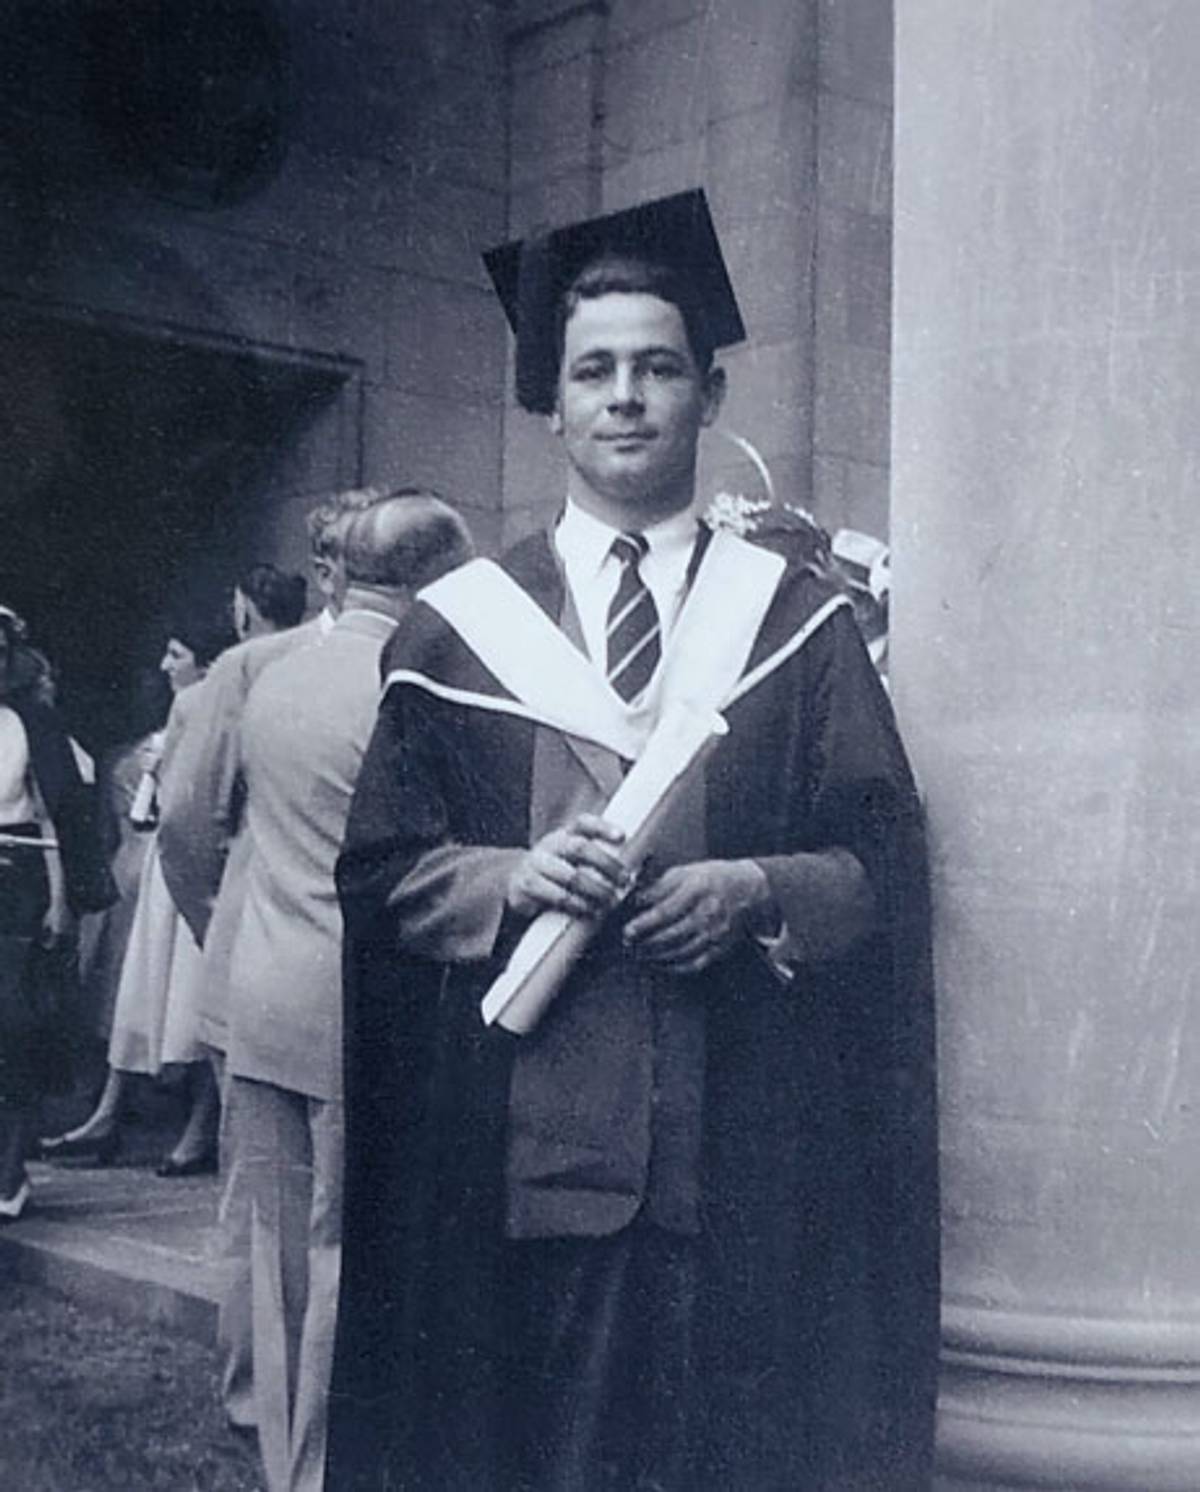 Graduation from JTS, 1952